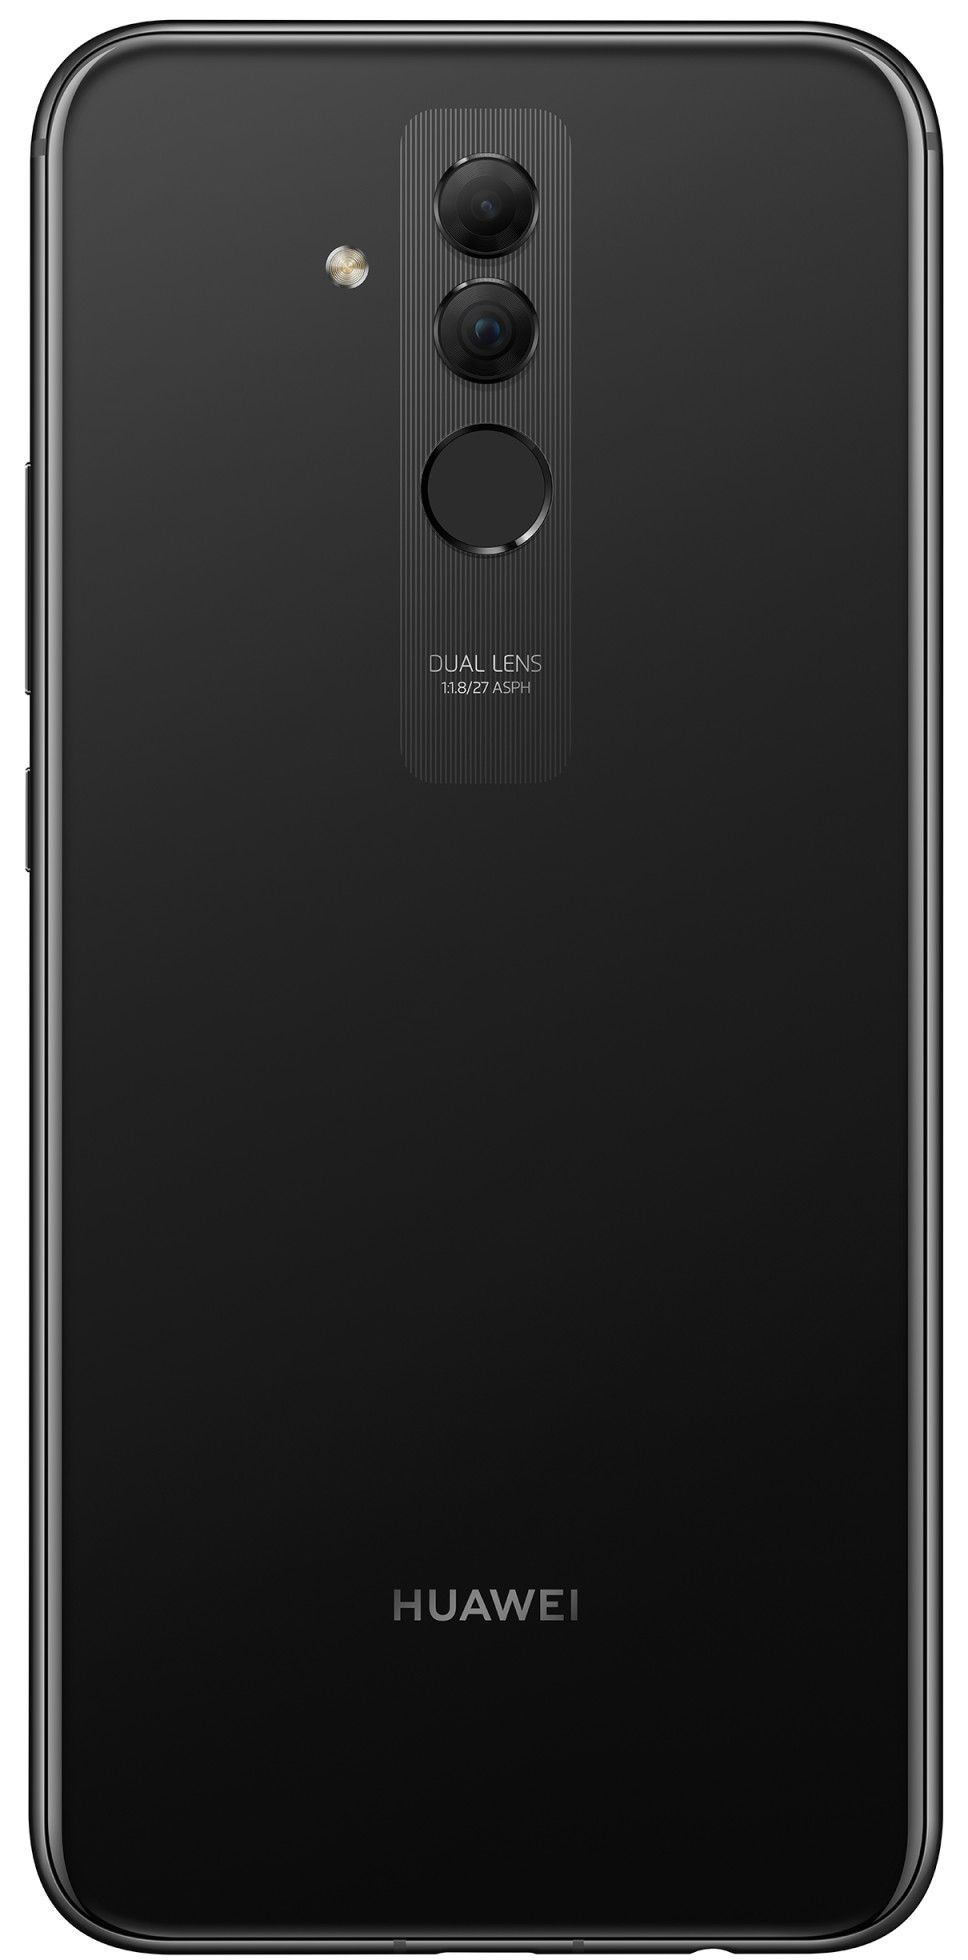 Хуавей 20 lite. Huawei Mate 20 Lite. Huawei Mate 20 Lite 64gb. Huawei Mate 20 Lite Sne-lx1. Смартфон Huawei Mate 20 Lite Black (Sne-lx1).